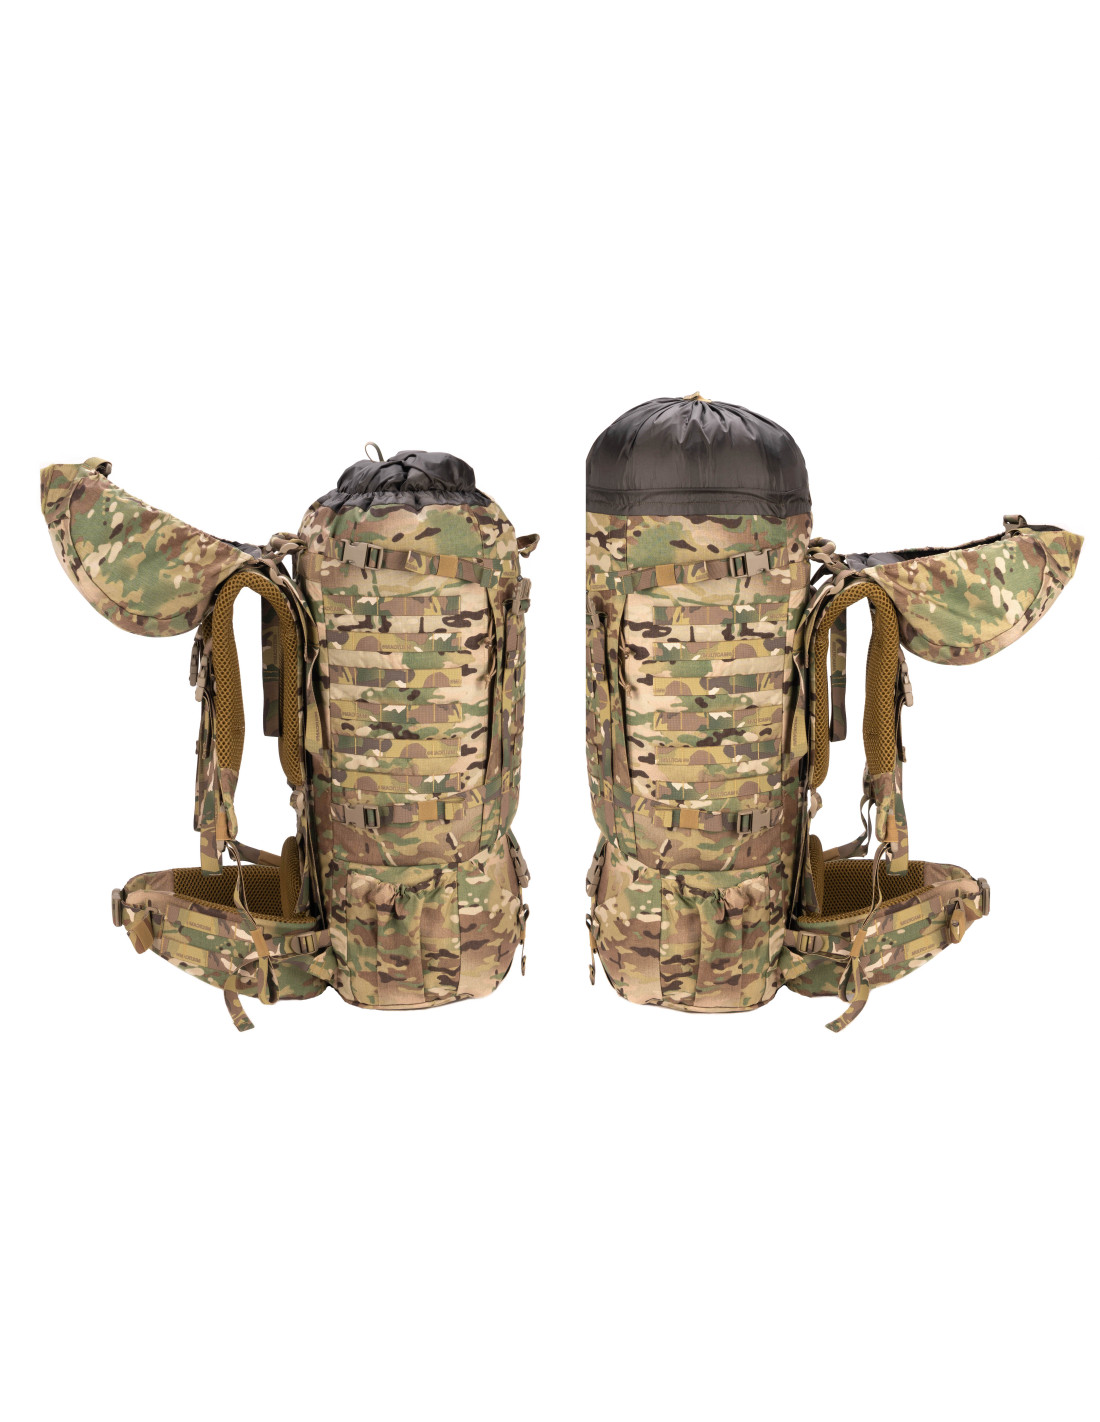 Buy Tactical backpack UTactic Raid Pack 100 - Utactic